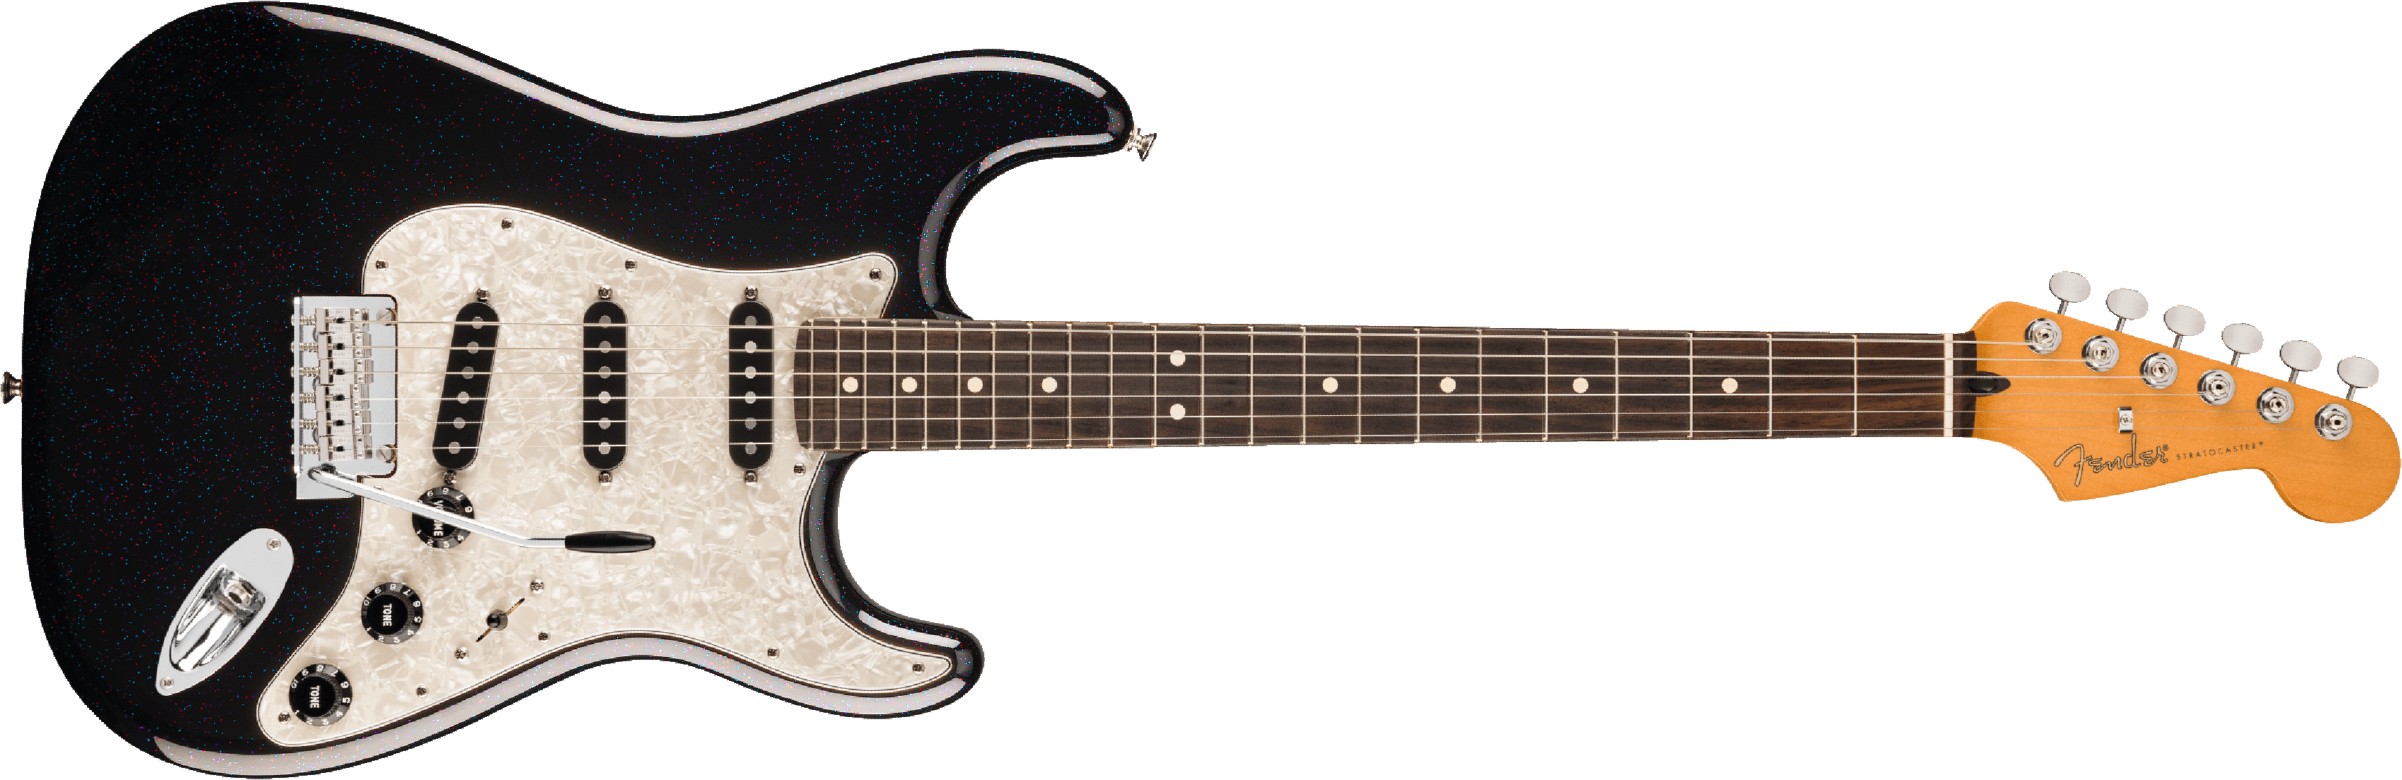 Fender Stratocaster Player 70th Anniversary 3s Trem Rw - Nebula Noir - Str shape electric guitar - Main picture